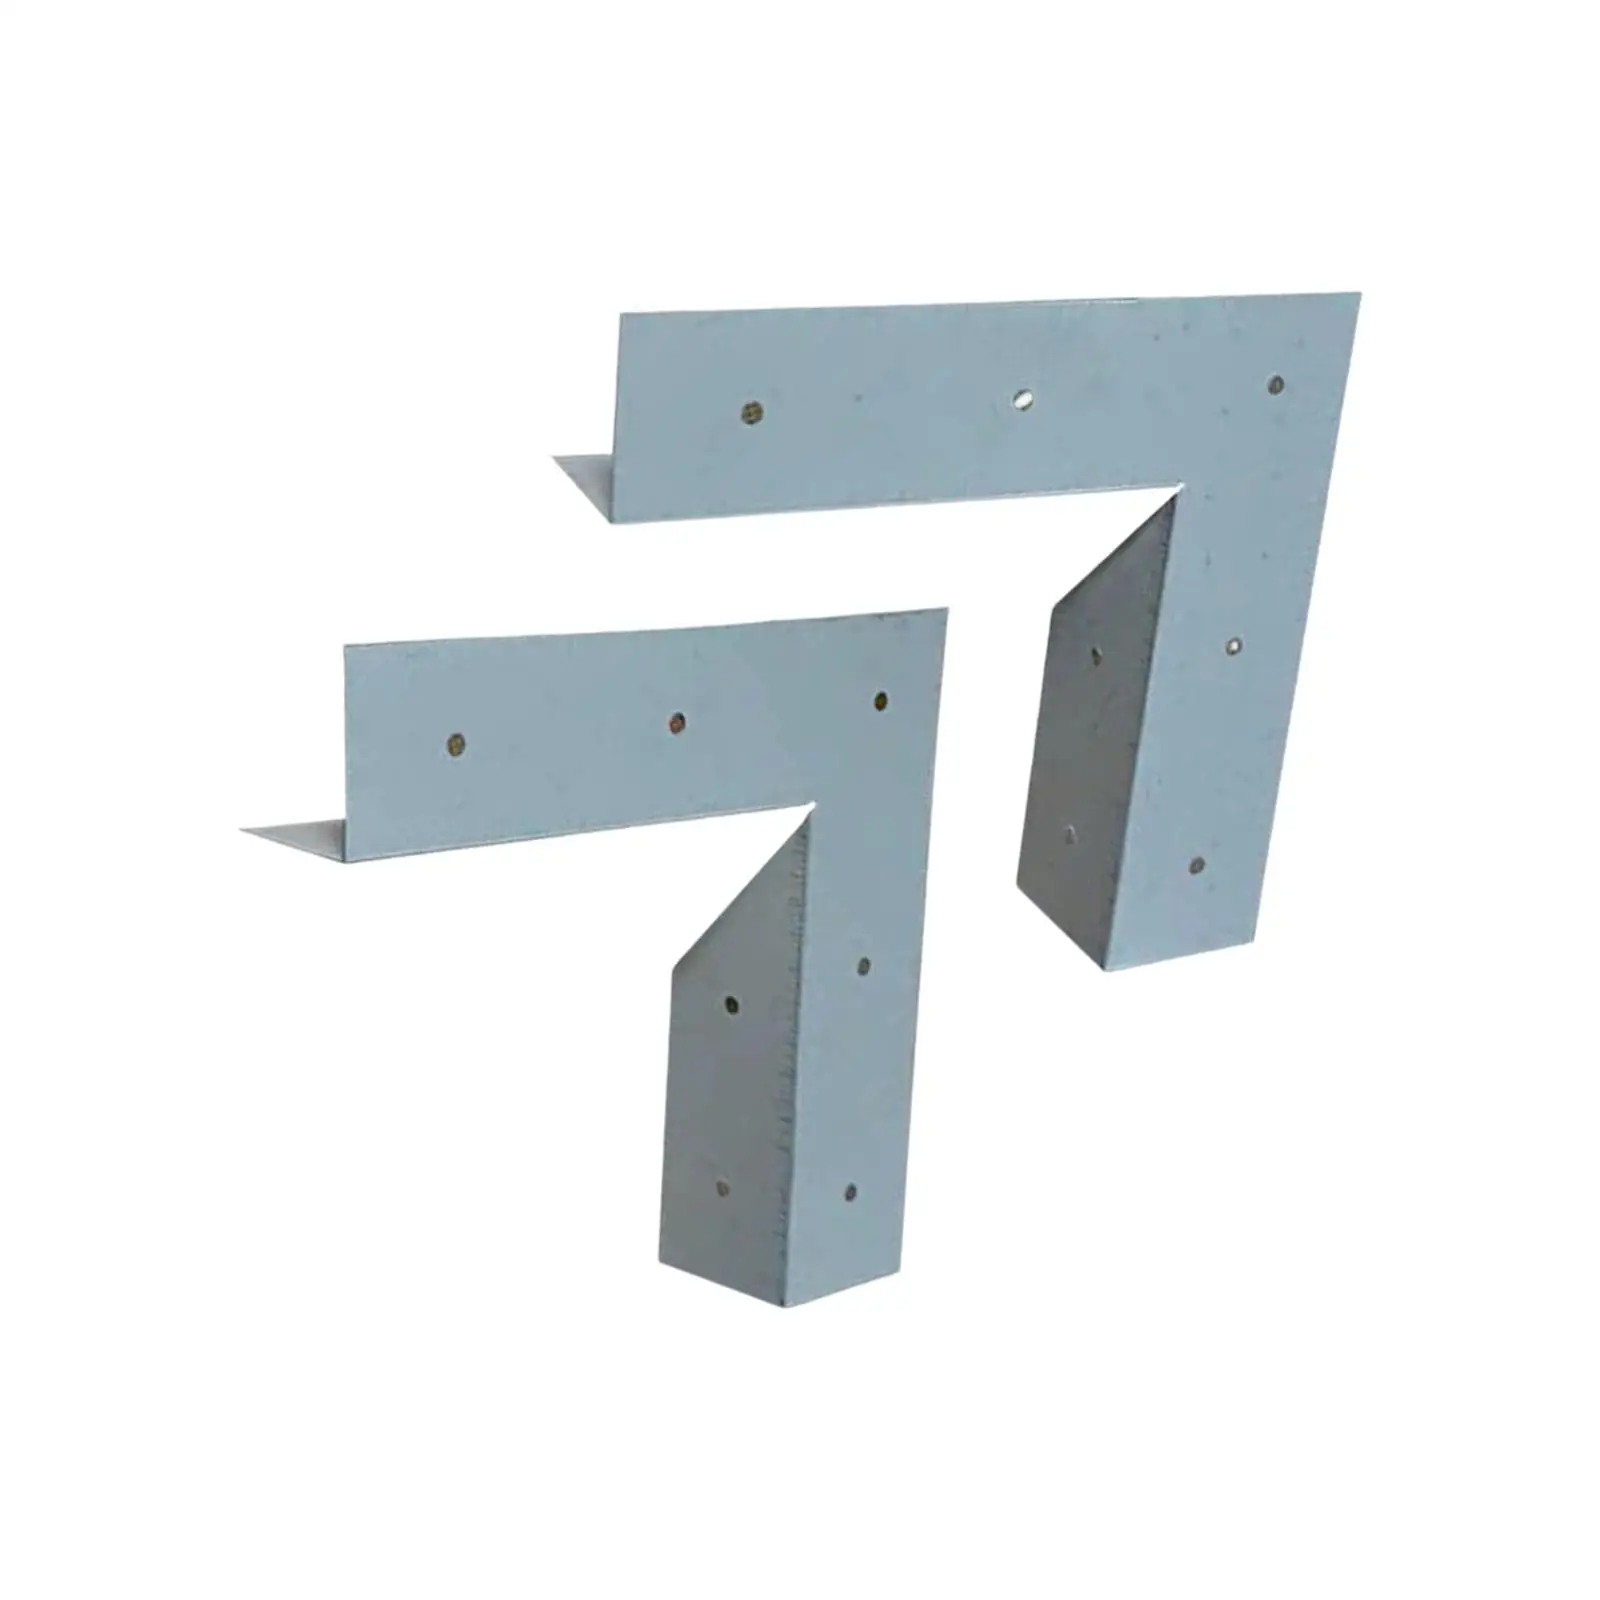 2x Heavy Duty Angles Fixing Support hardware Corners Fixation Mounts Corner Reinforcement Brackets for Shelf Wall Racks Bedframe